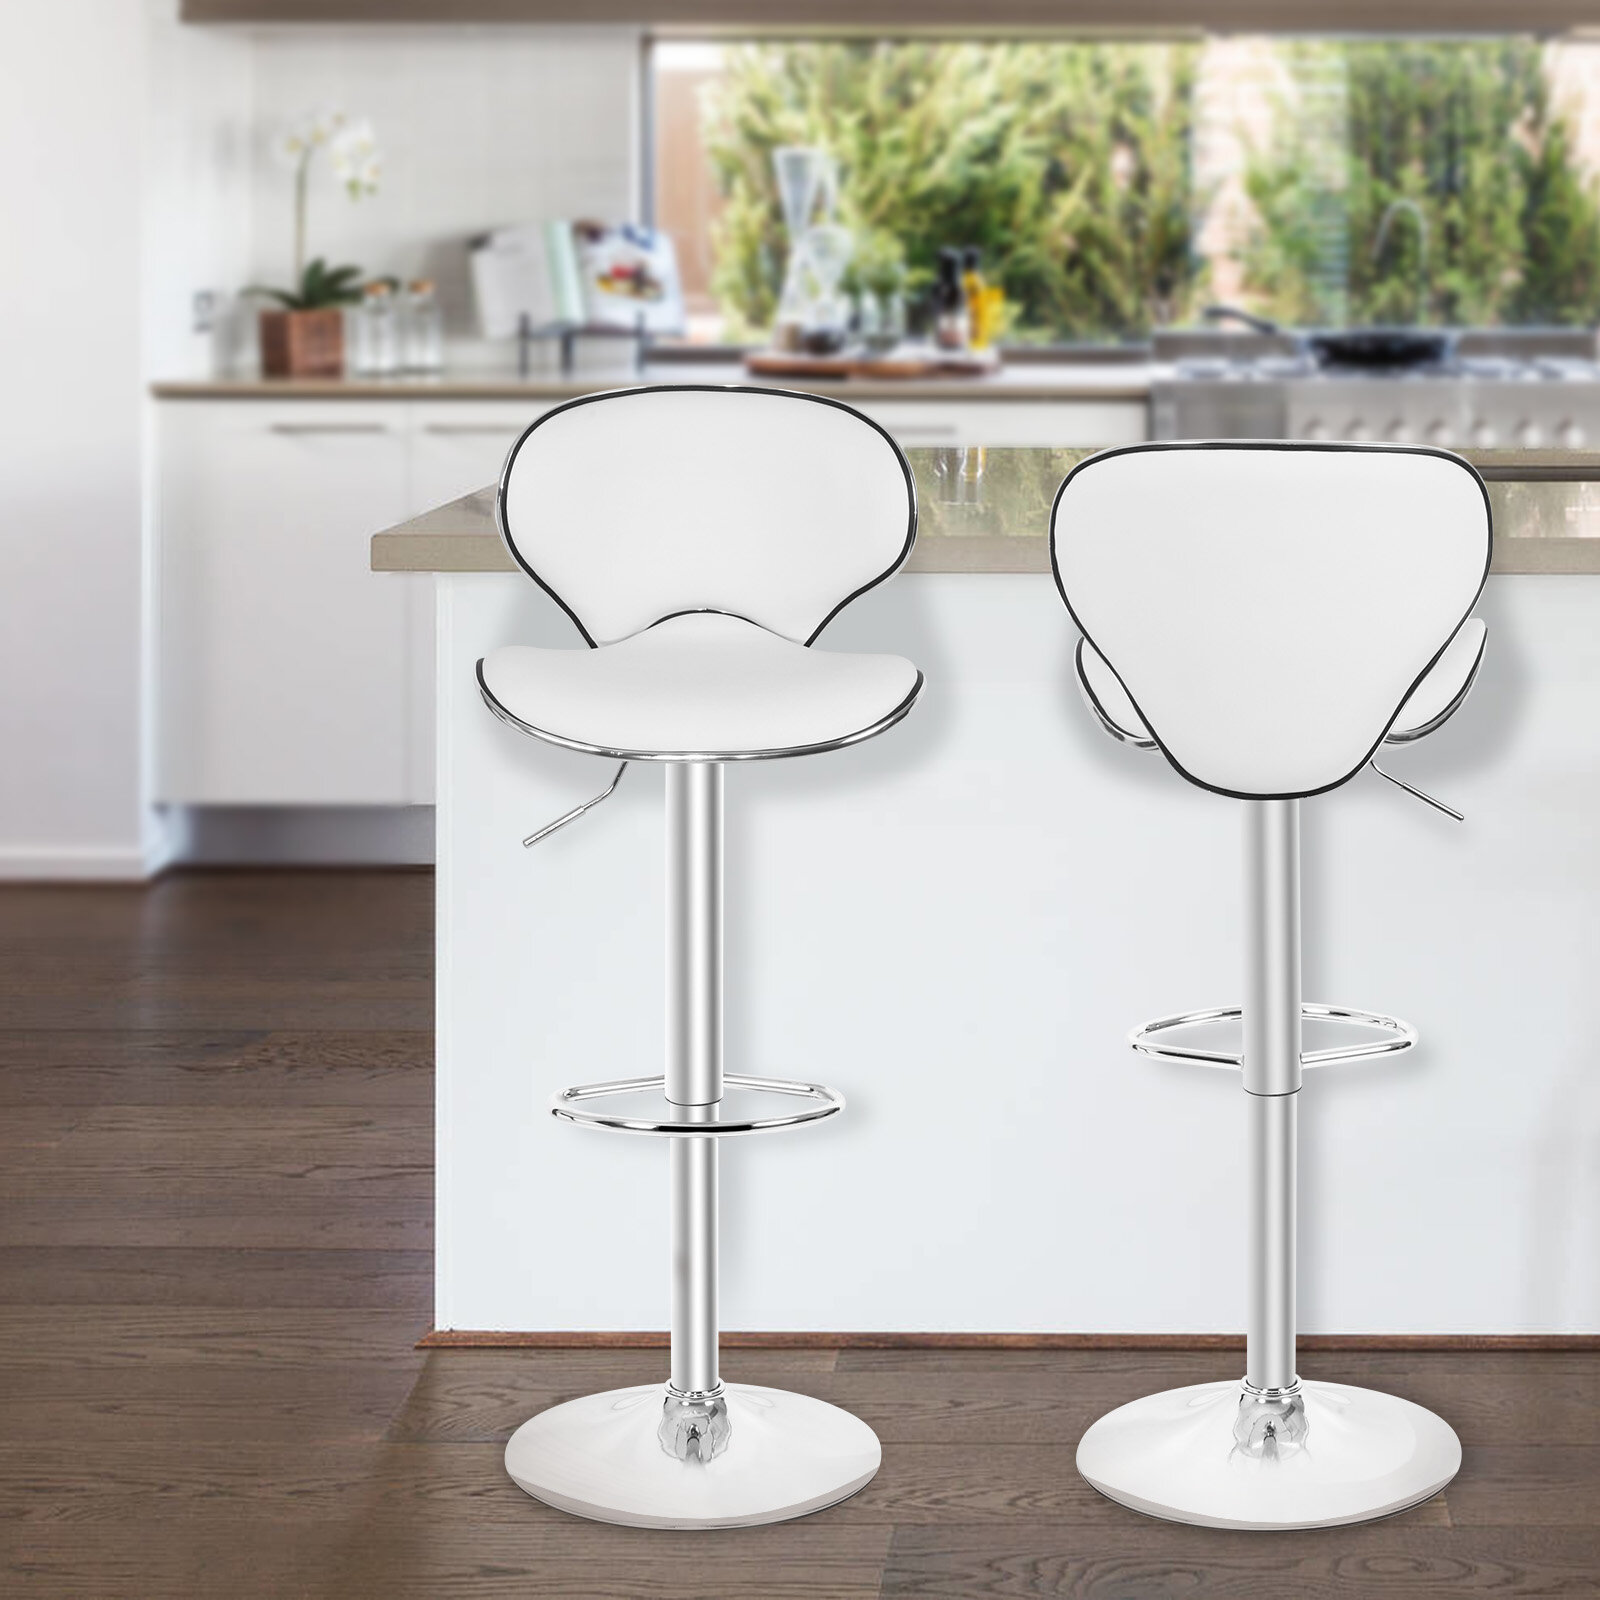 Set of 4 Bar Stools Swivel Adjustable Counter Bar Chair Dining Kitchen Seat USA 